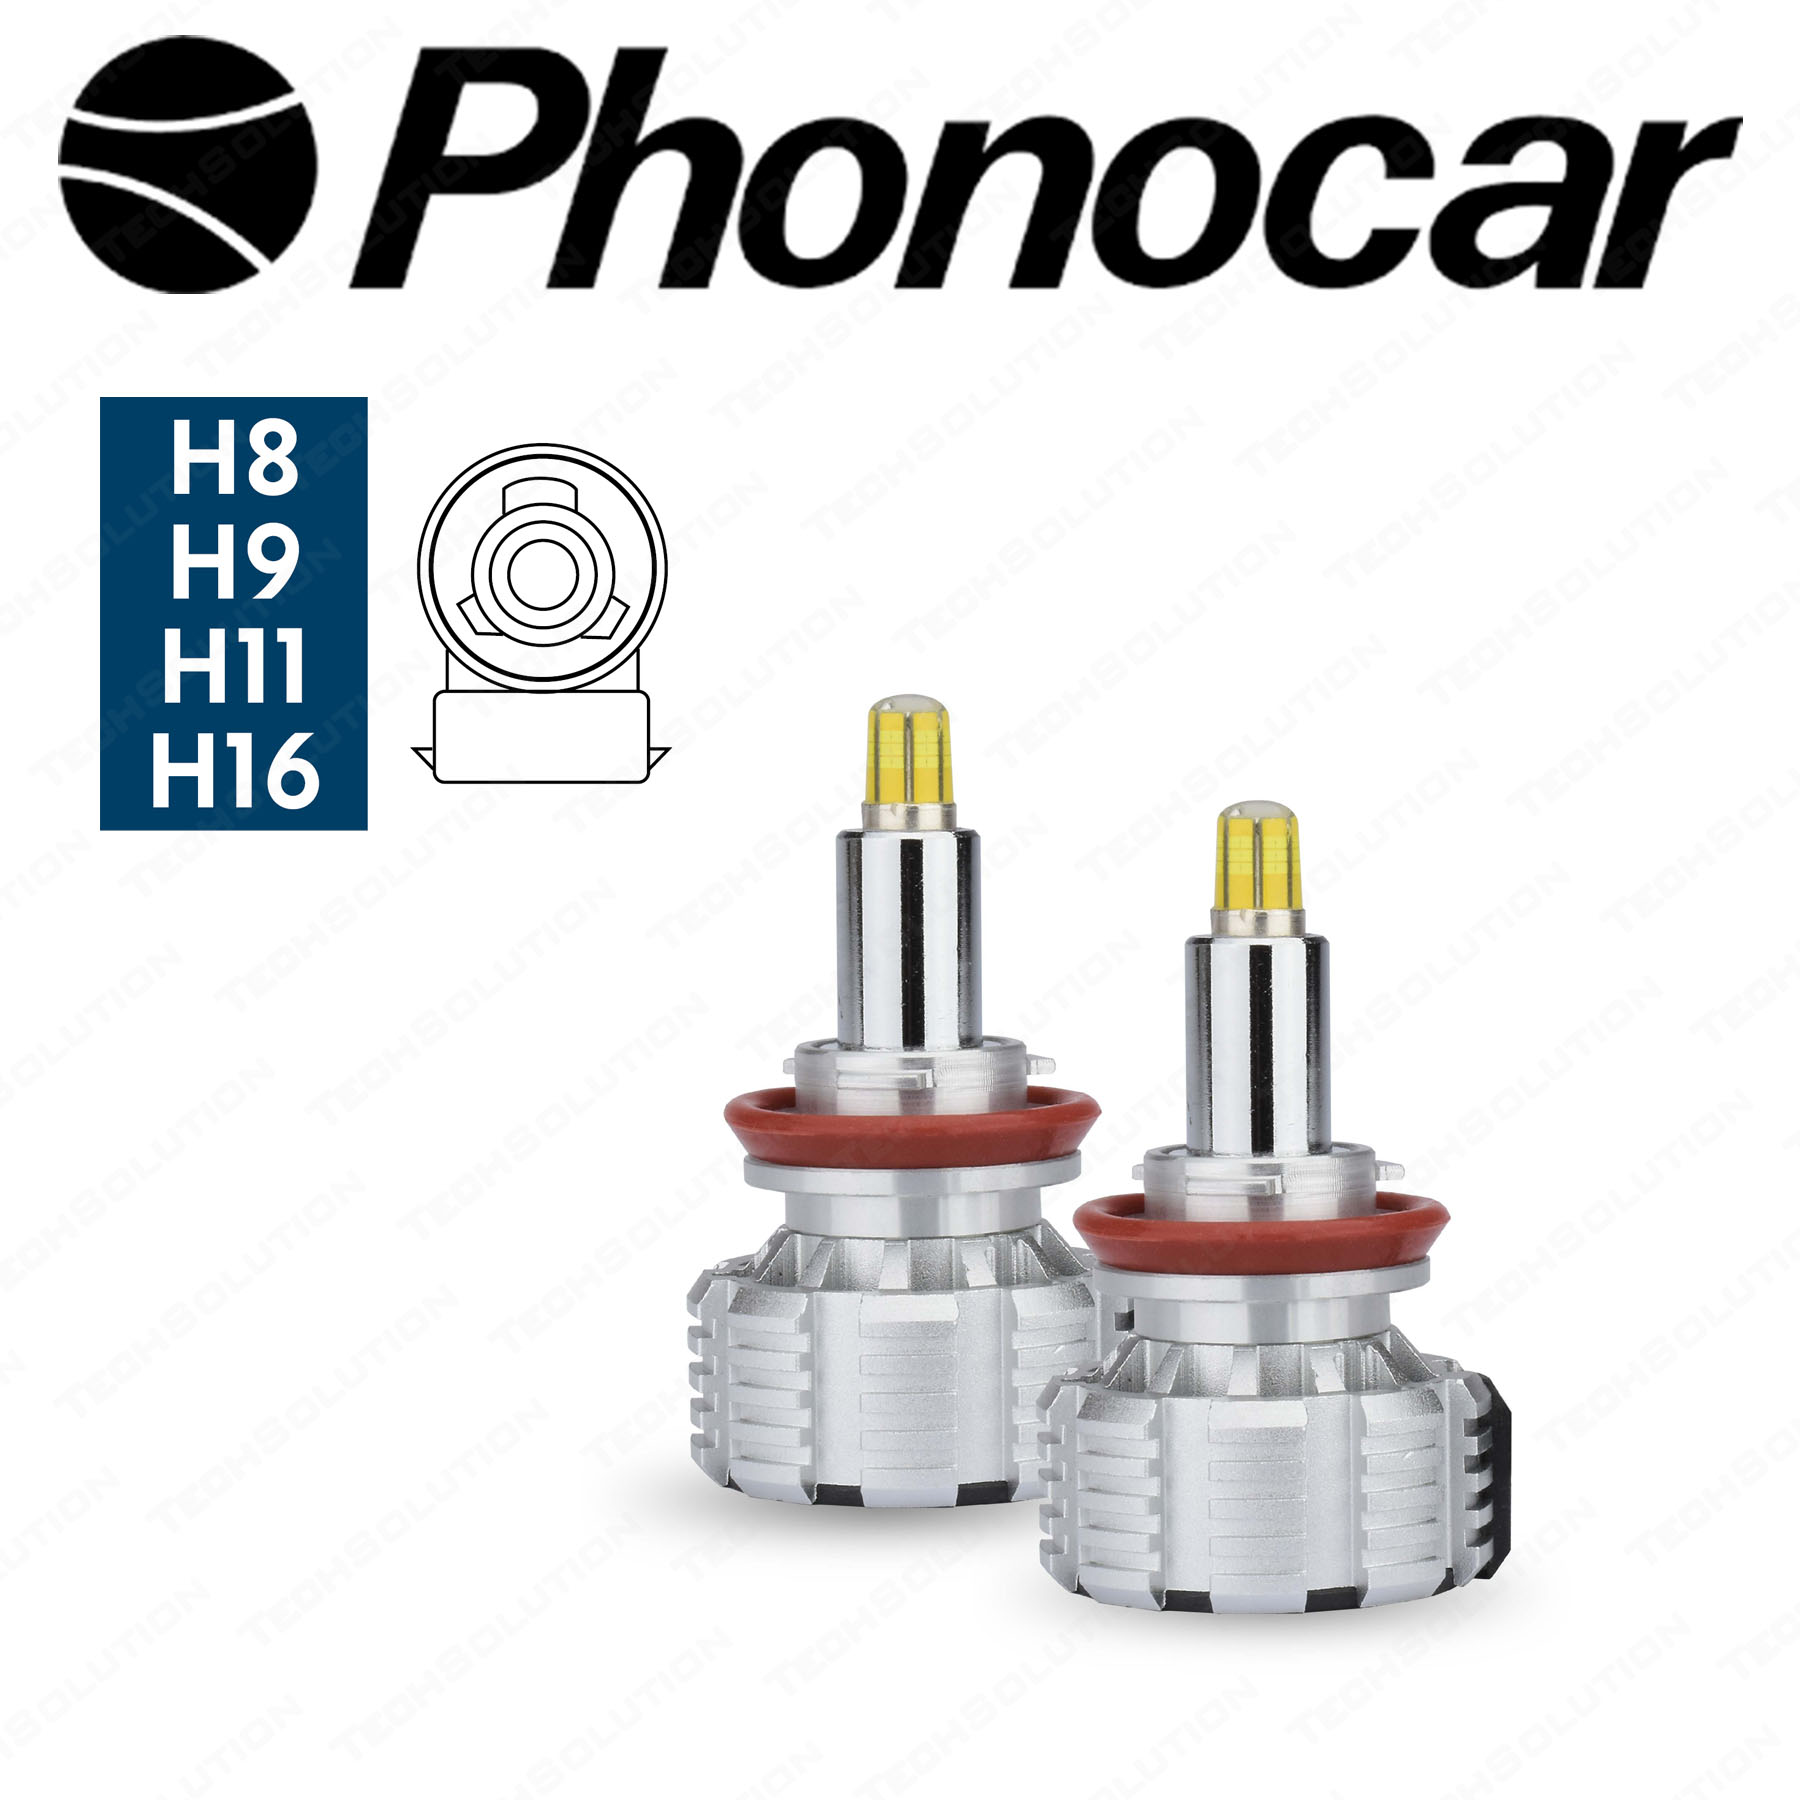 Phonocar 07544 Lampada Led H11 per fari Lenticolari - Tech Solution